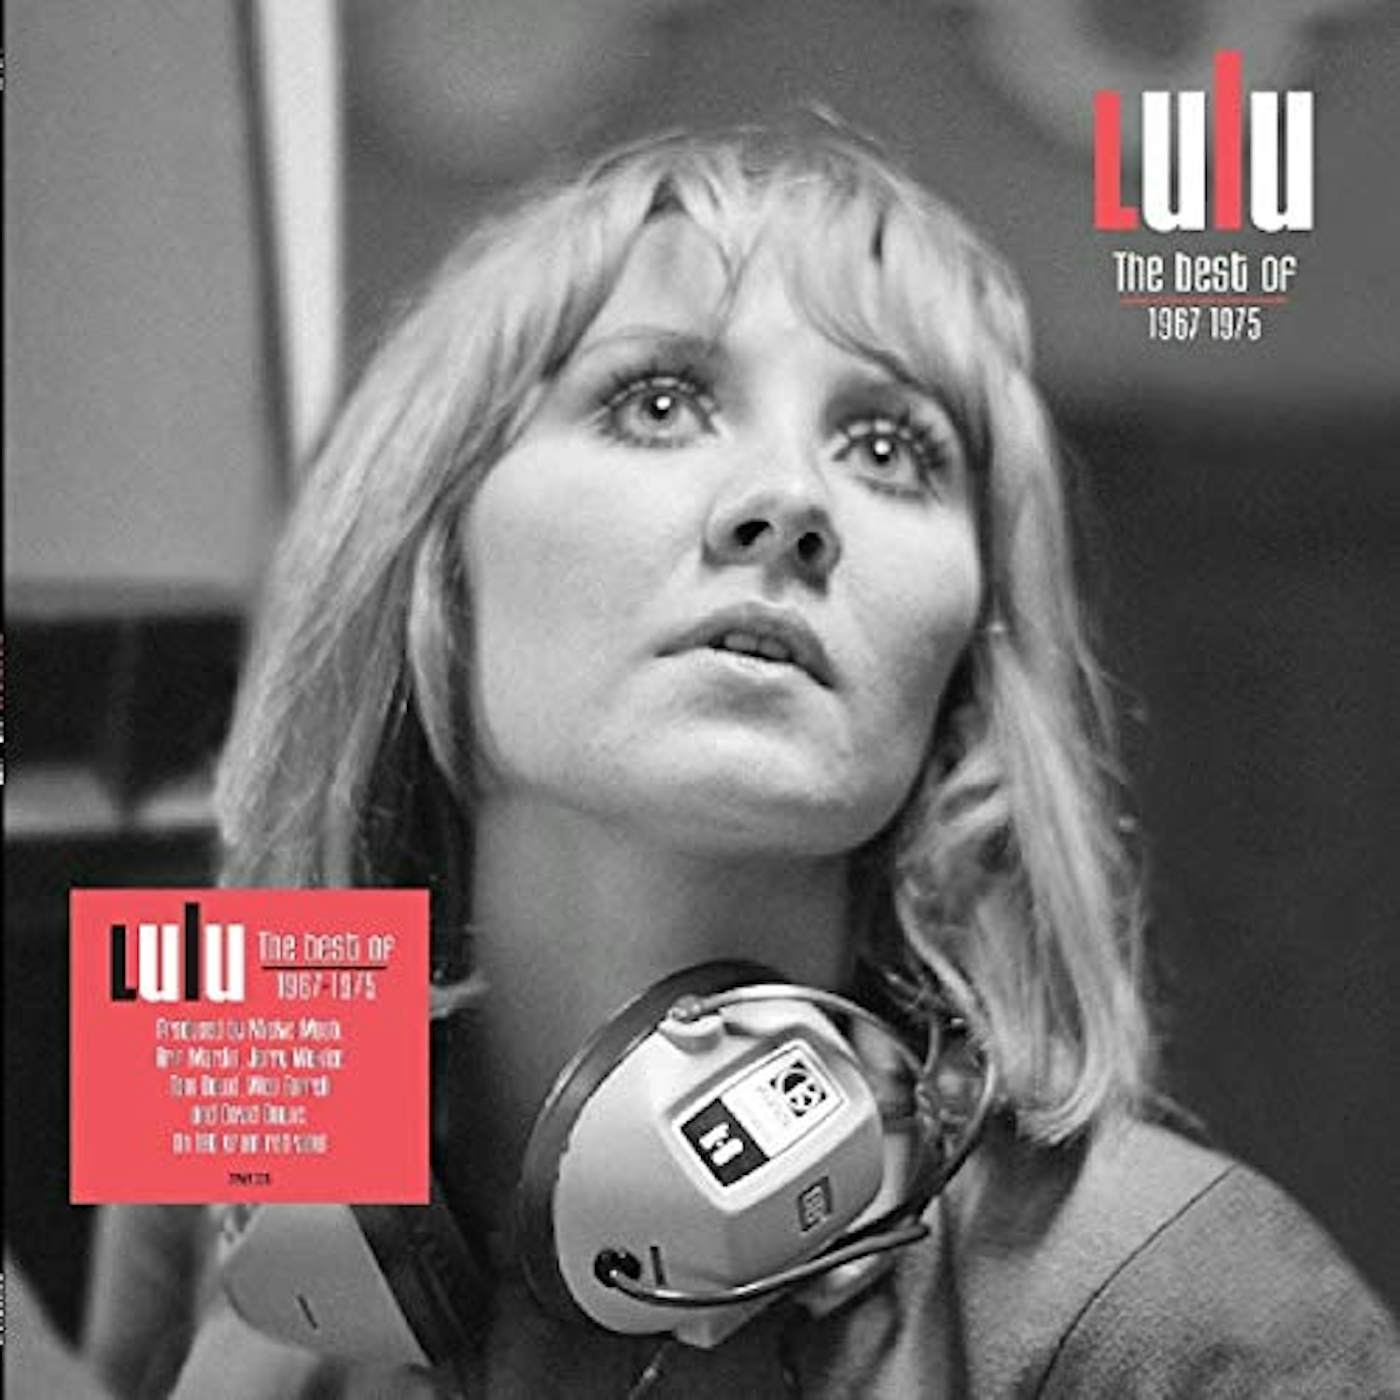 Lulu BEST OF 1967-1975 Vinyl Record